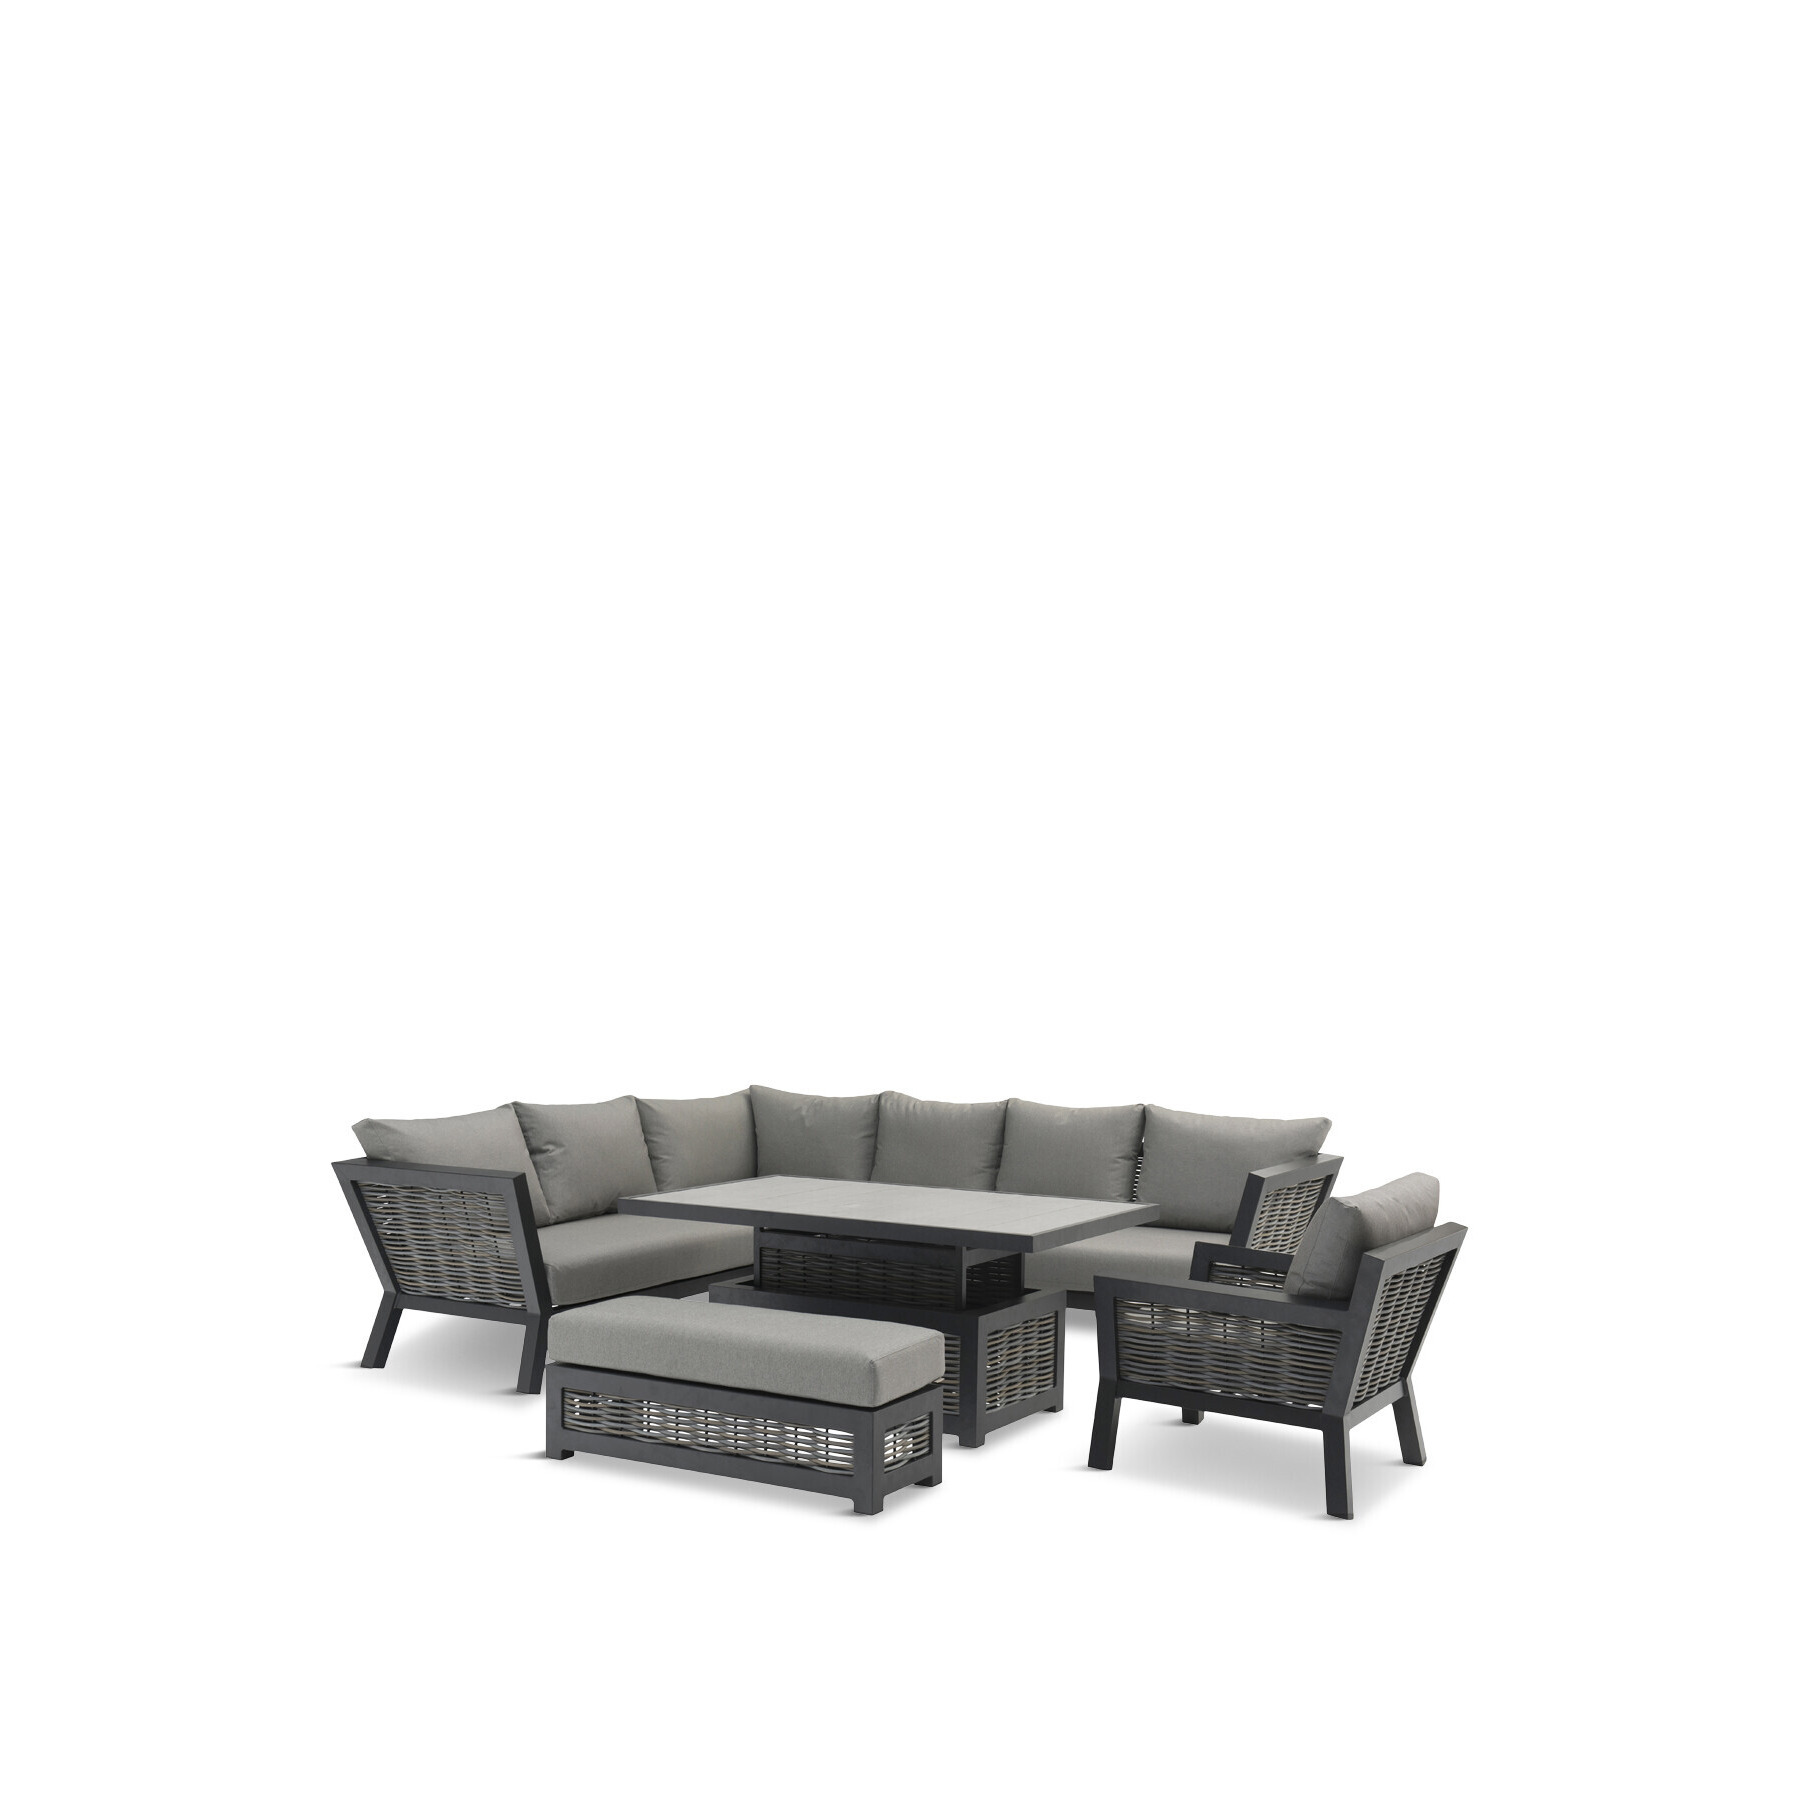 Bramblecrest Wicker Modular L-Shape Sofa with Piston Table, Bench & Chair Grey - image 1